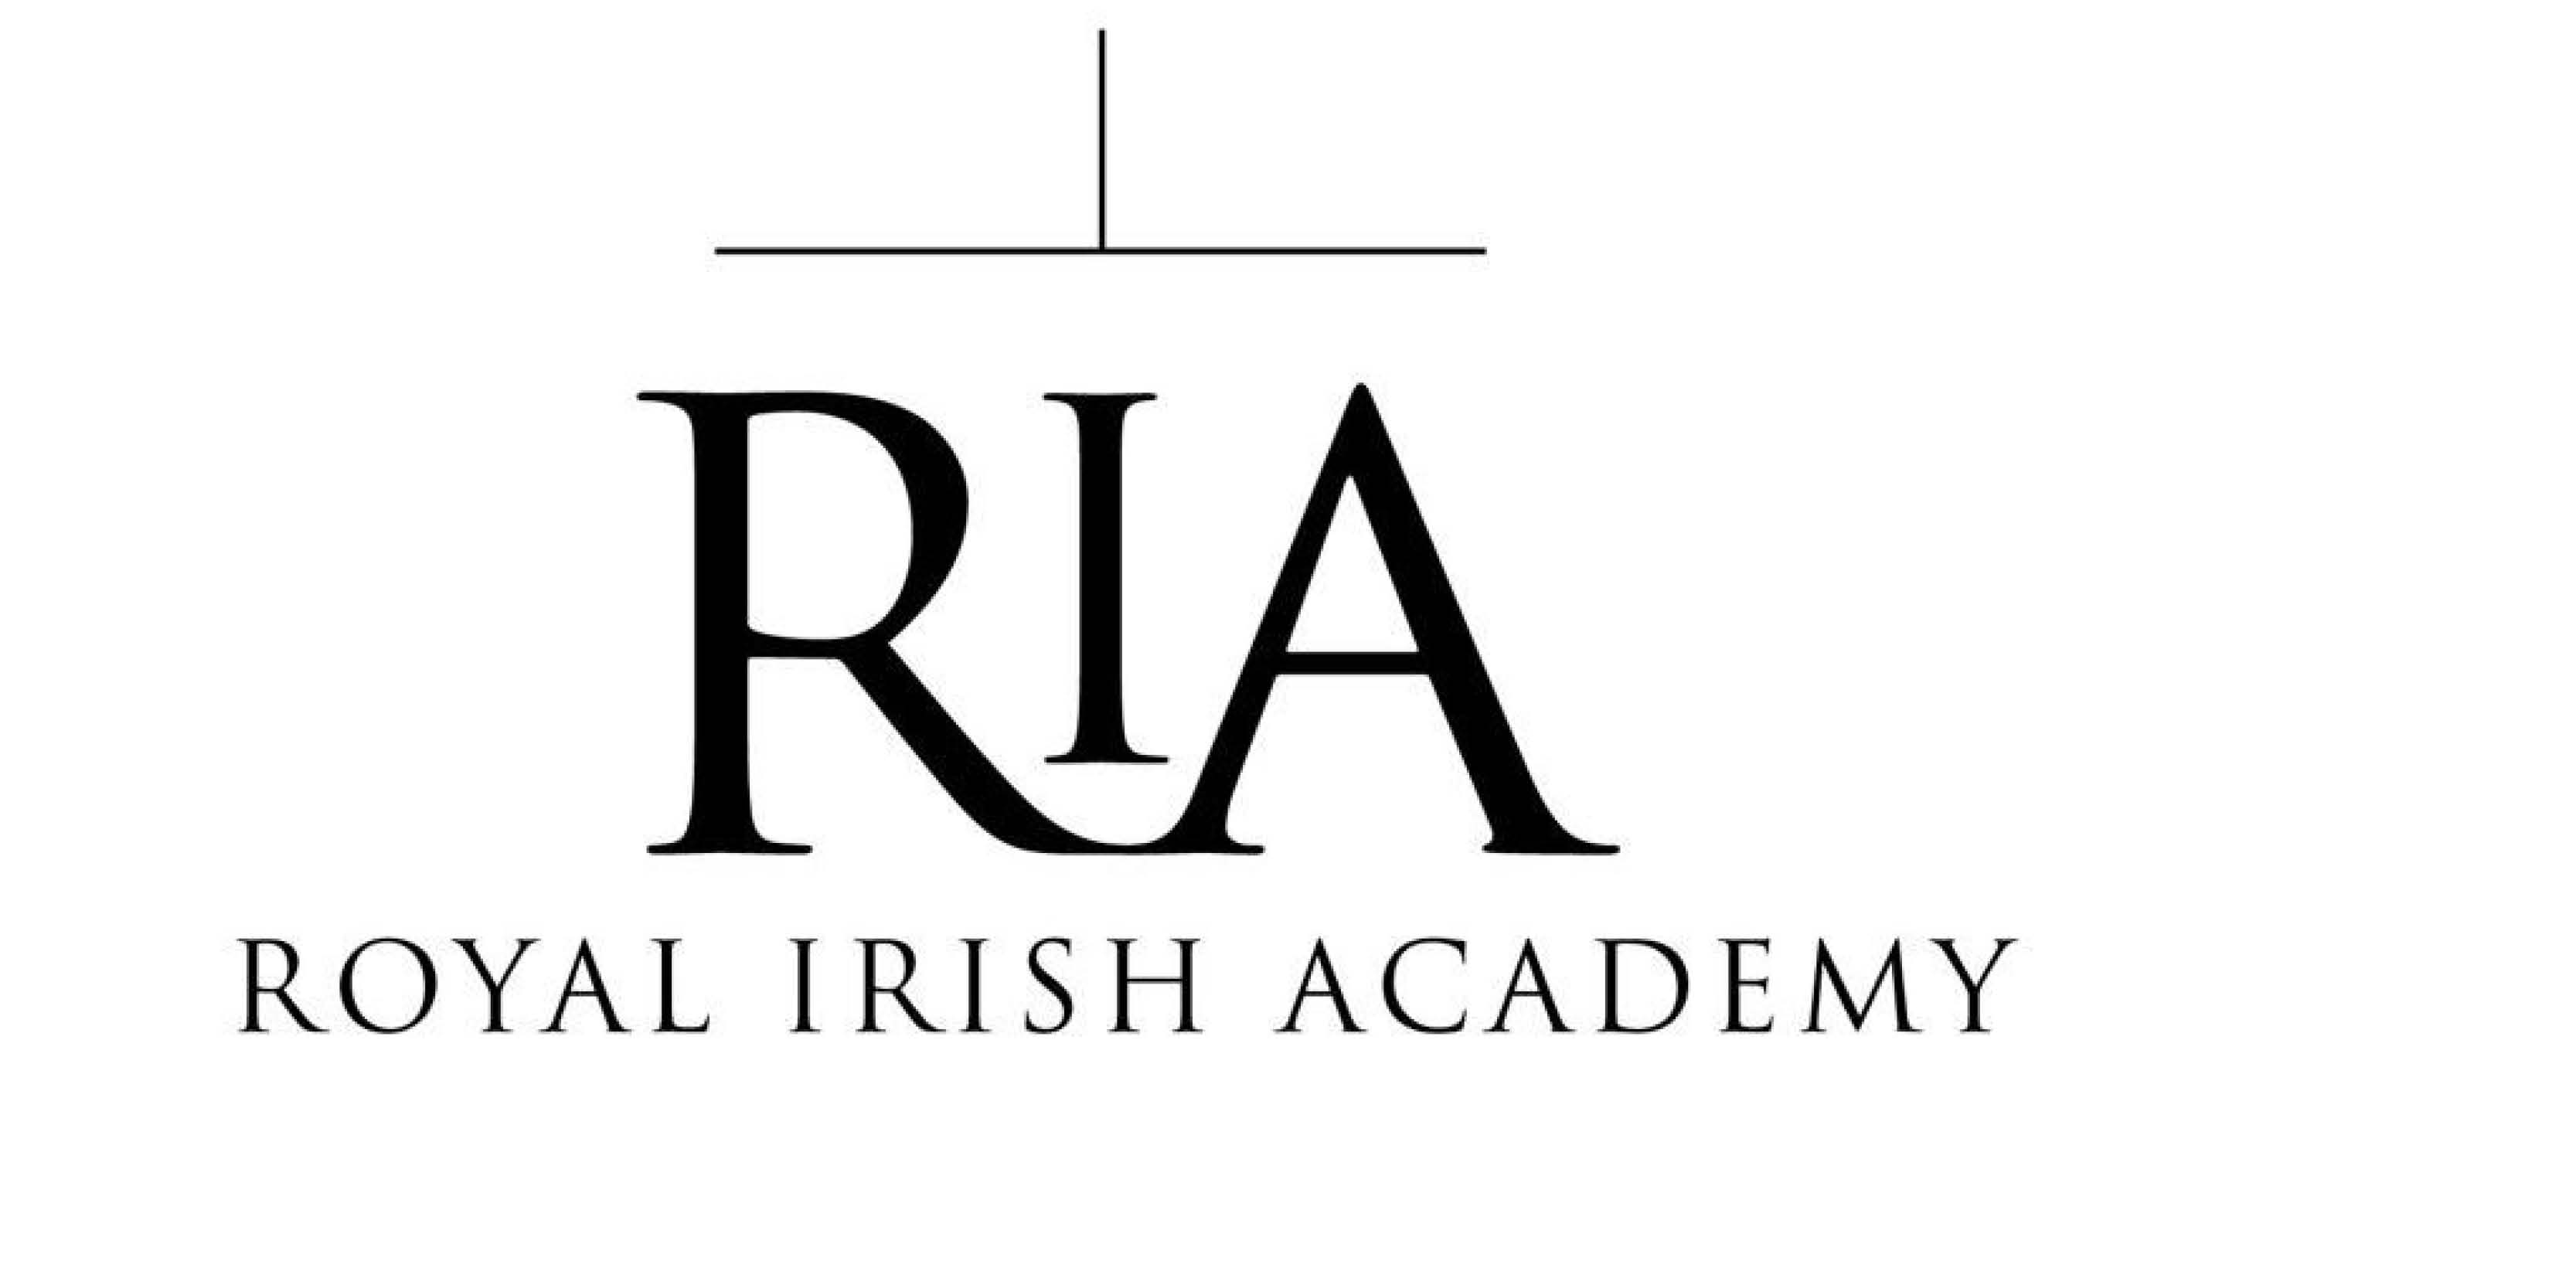 Royal Irish Academy appointments